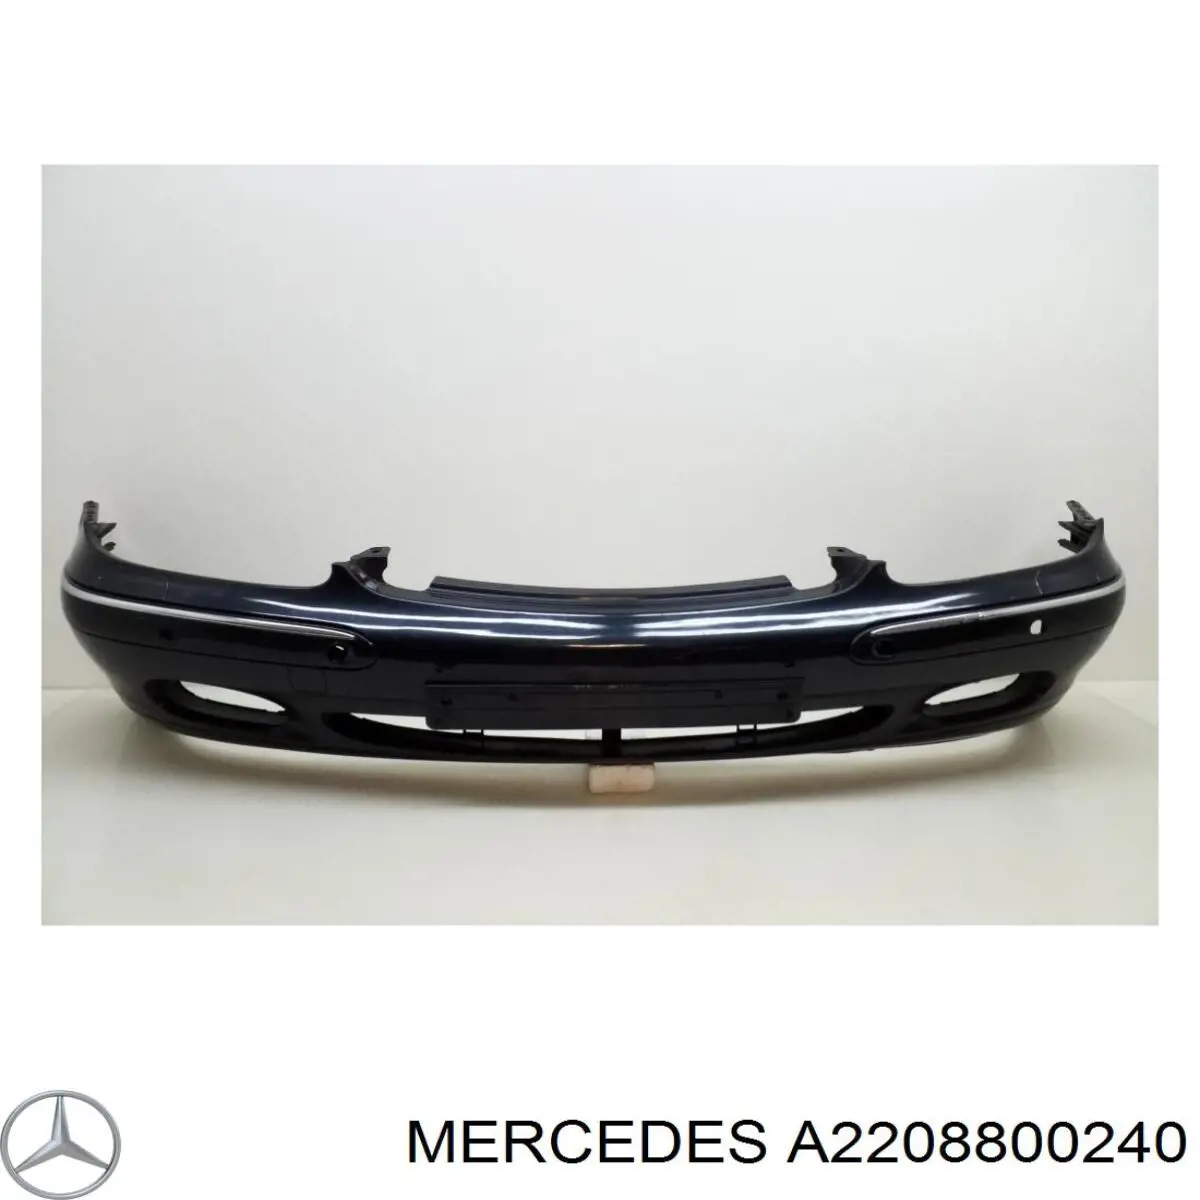 2208800240 Mercedes paragolpes delantero